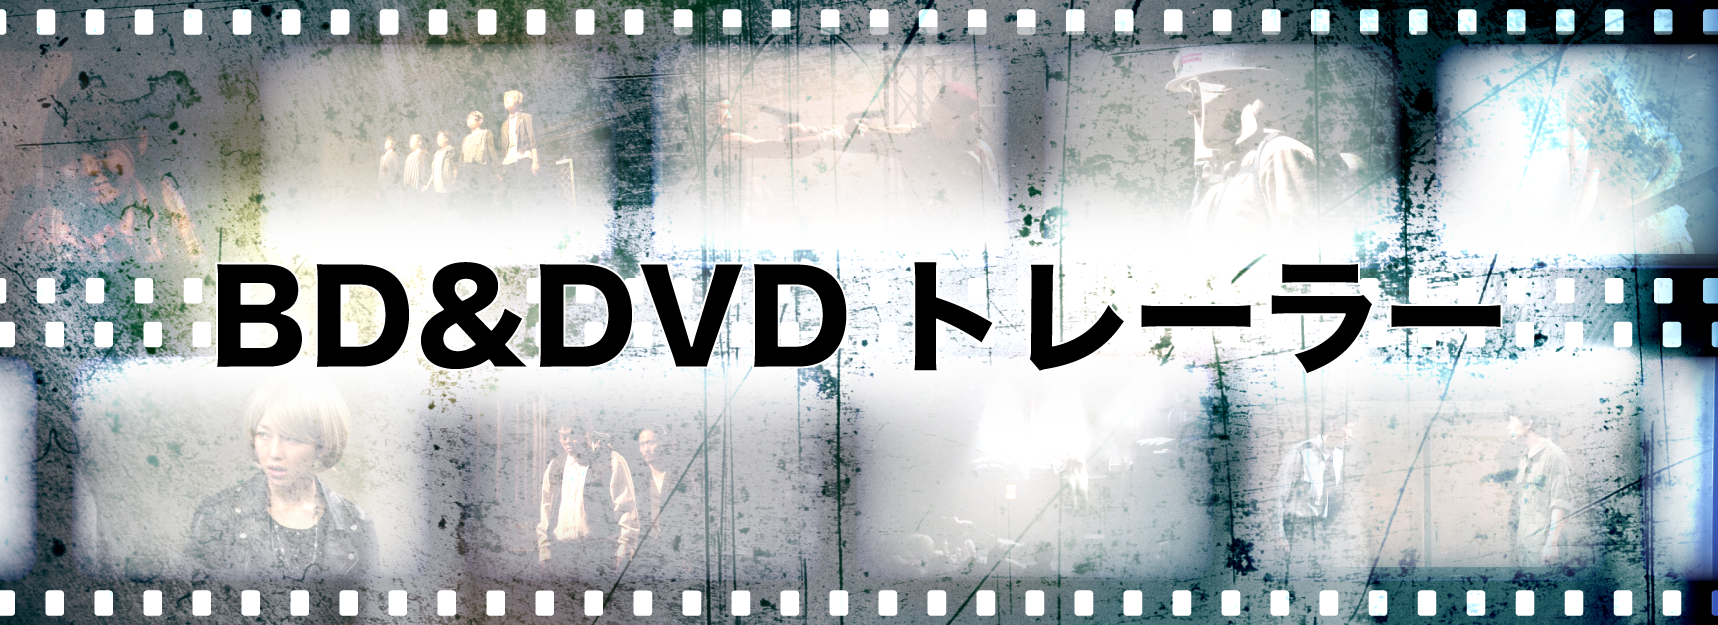 BD&DVDトレーラー